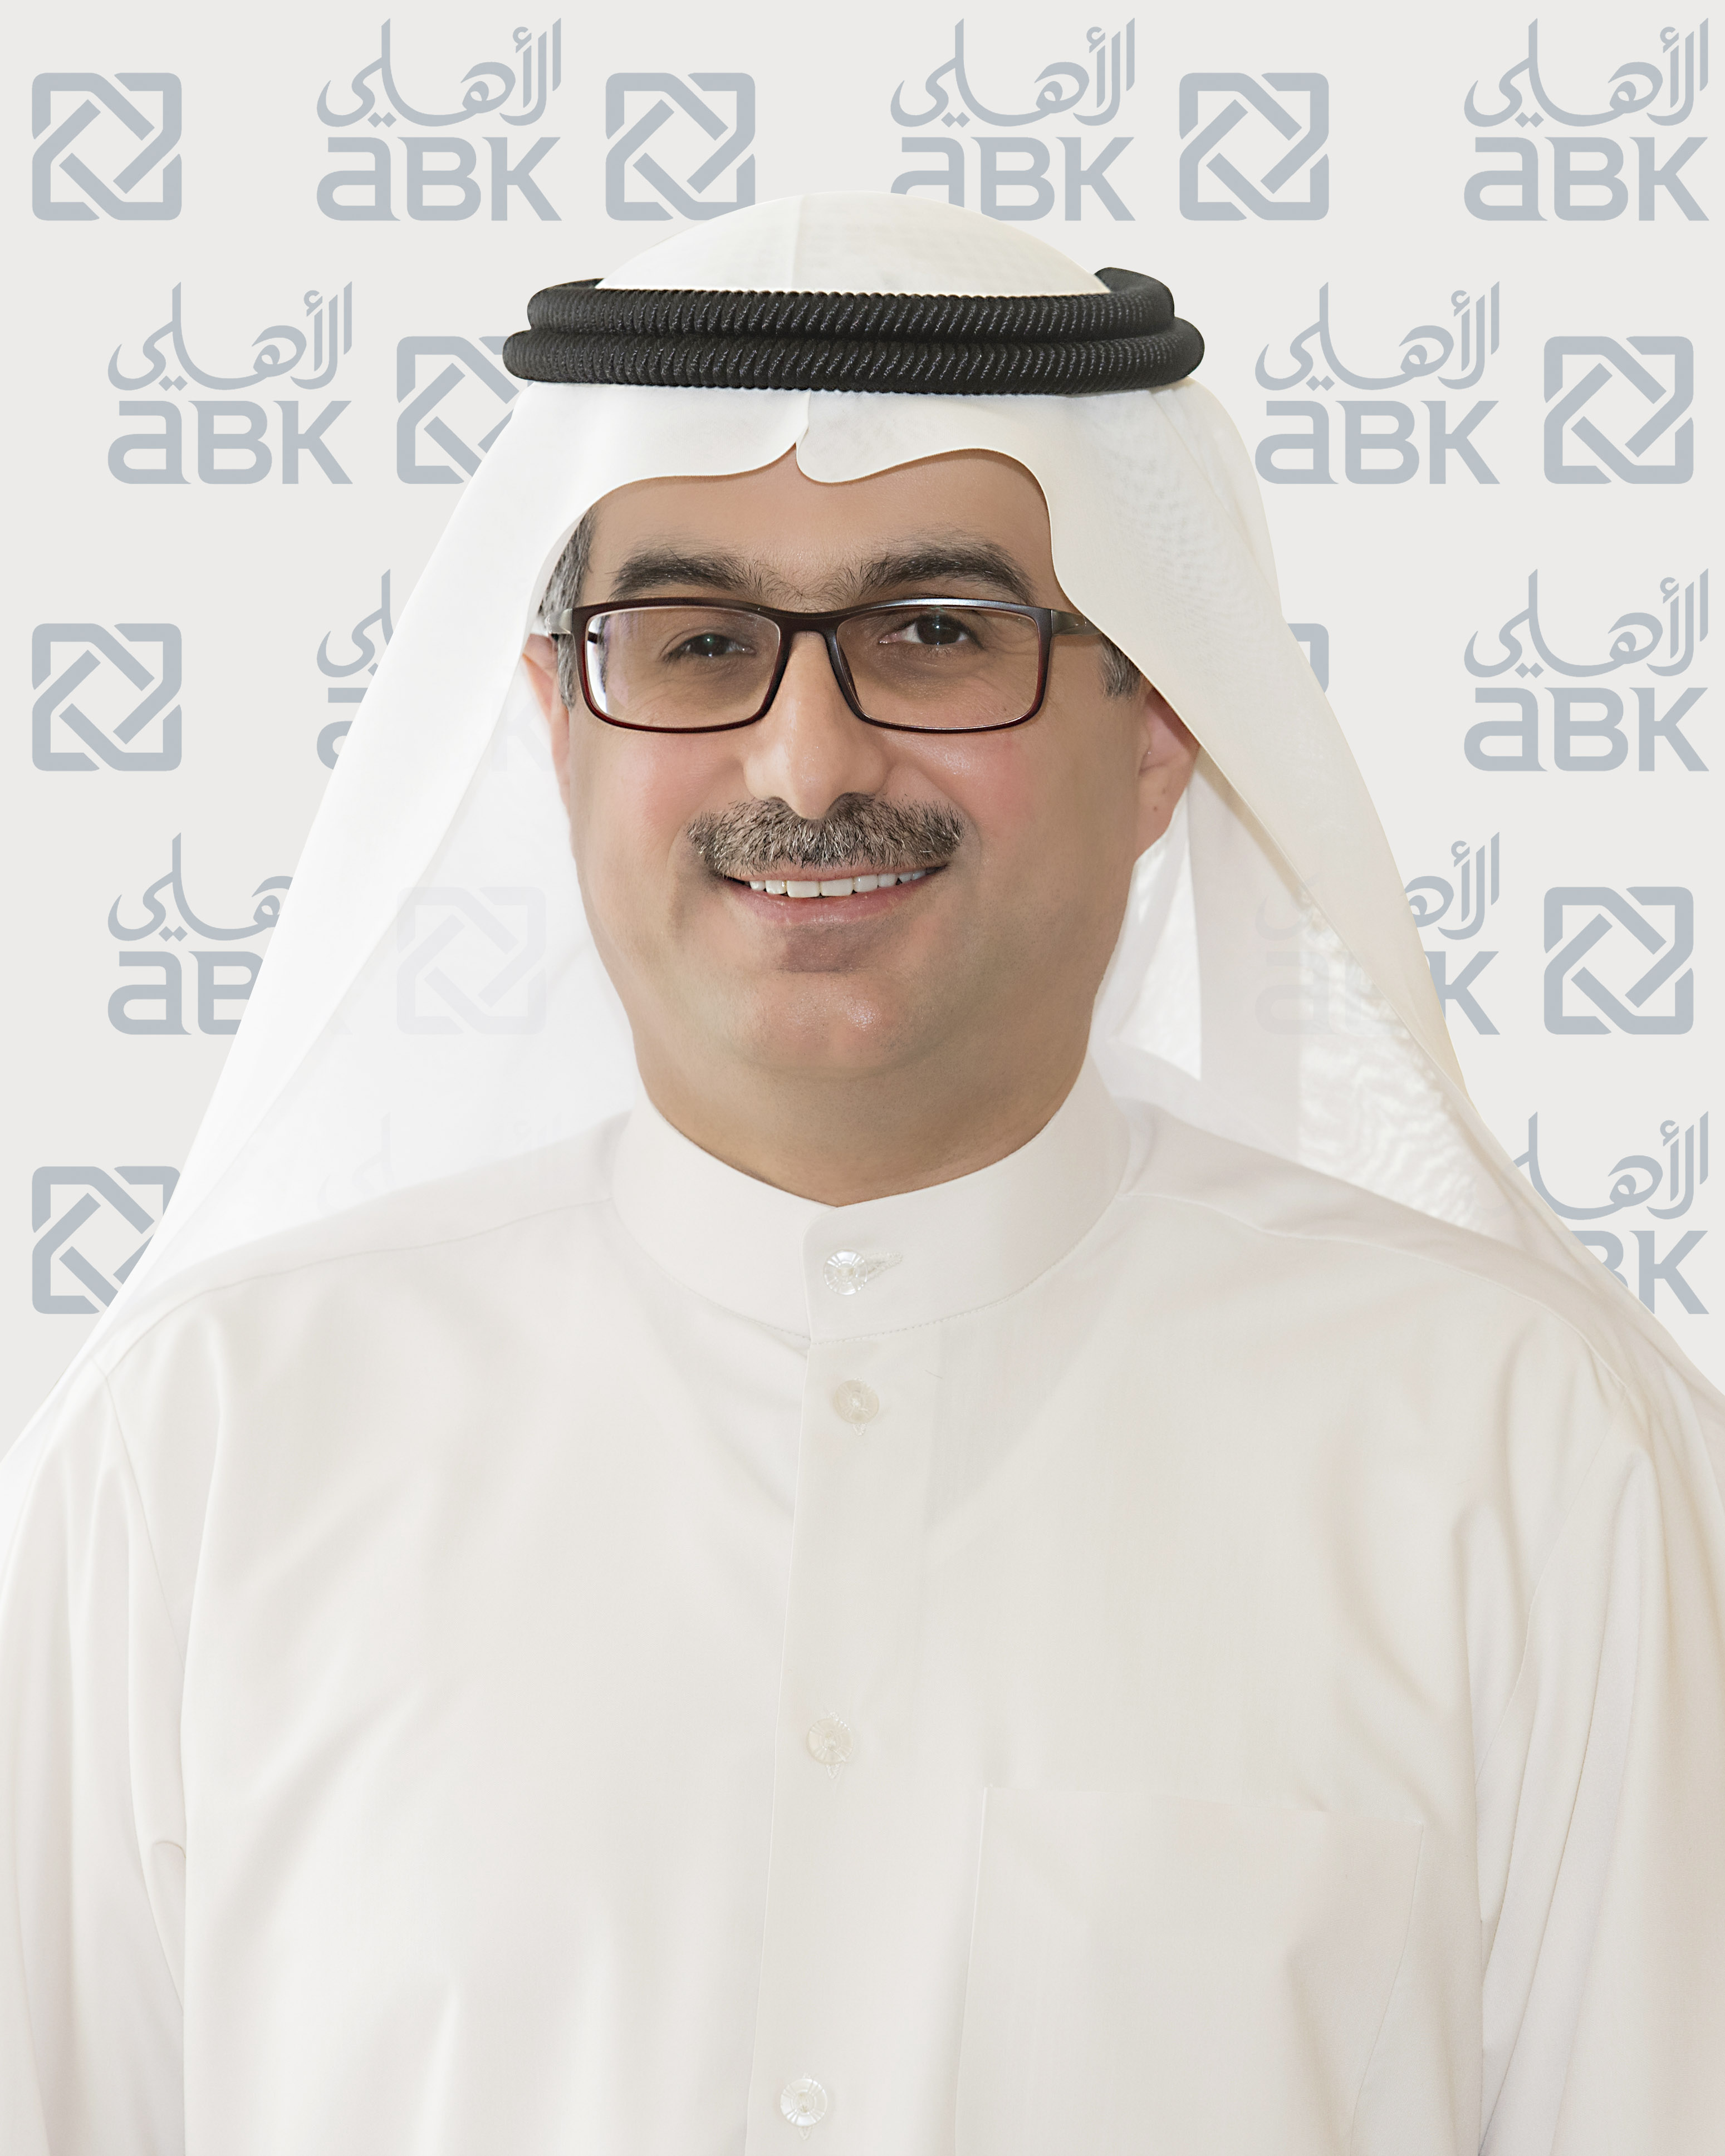 Chairman of ABK Talal Reza Behbehani